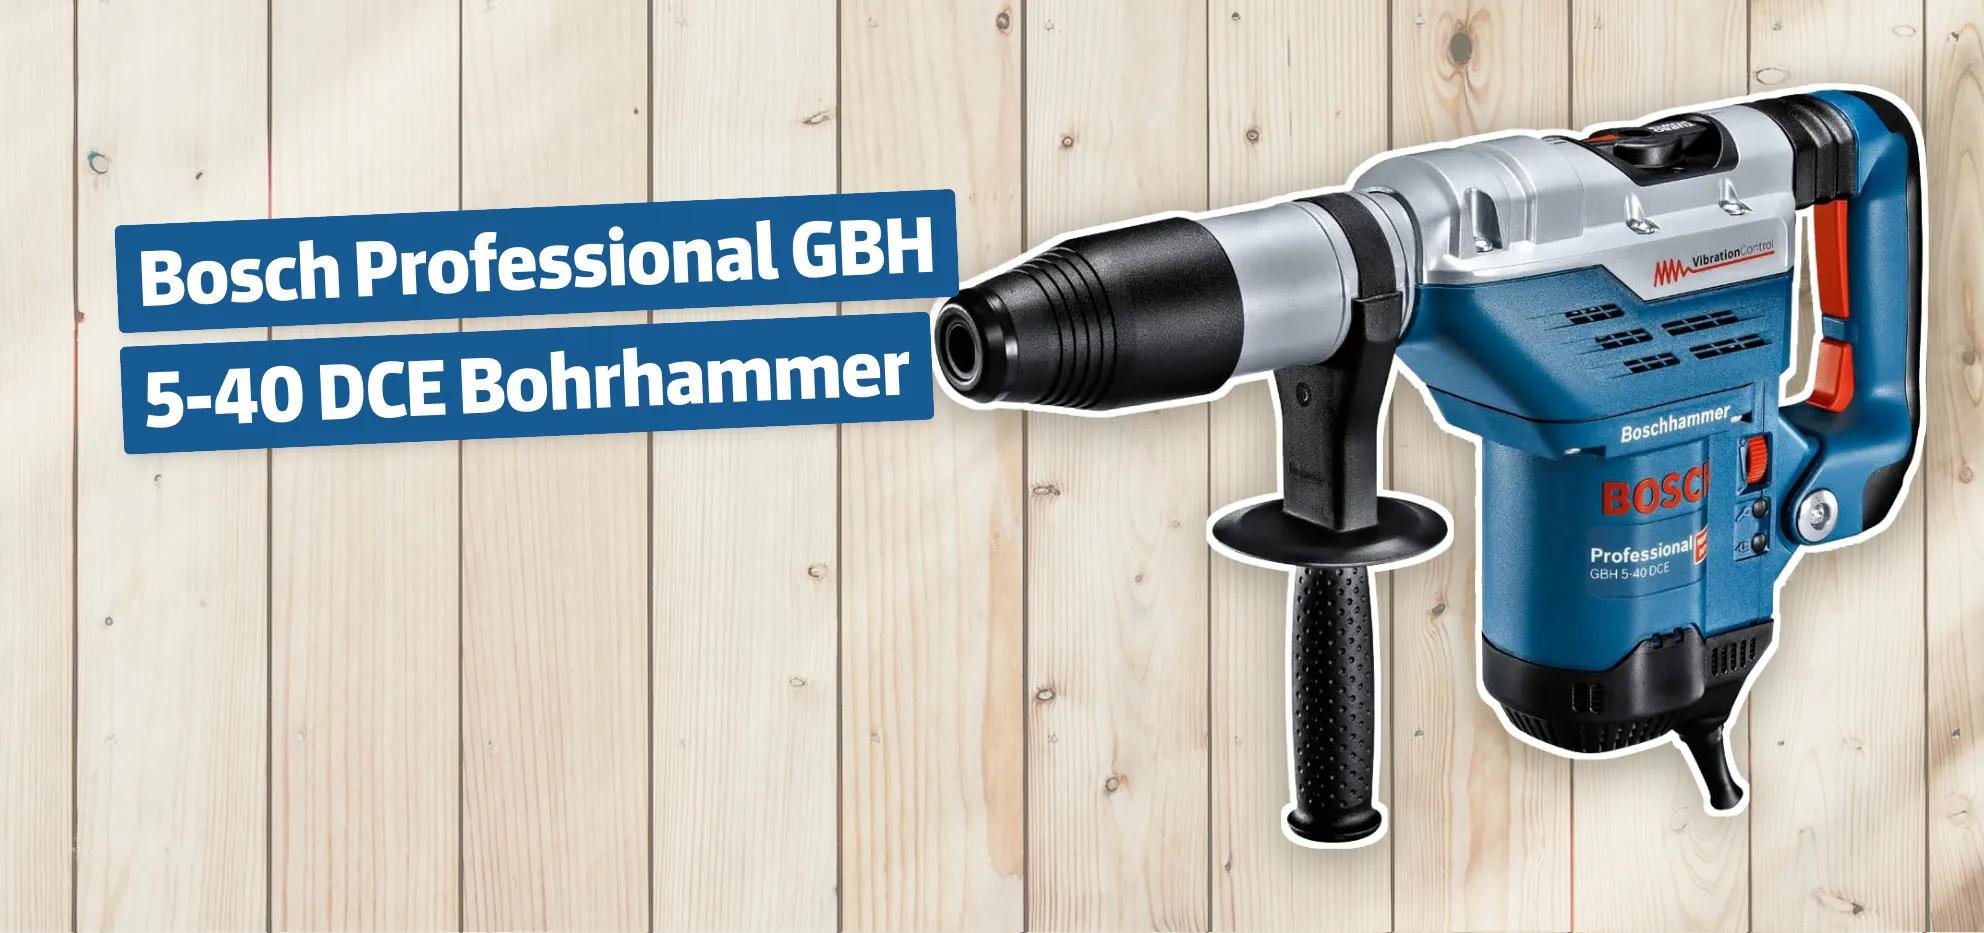 Bosch Professional GBH 5-40 DCE Bohrhammer